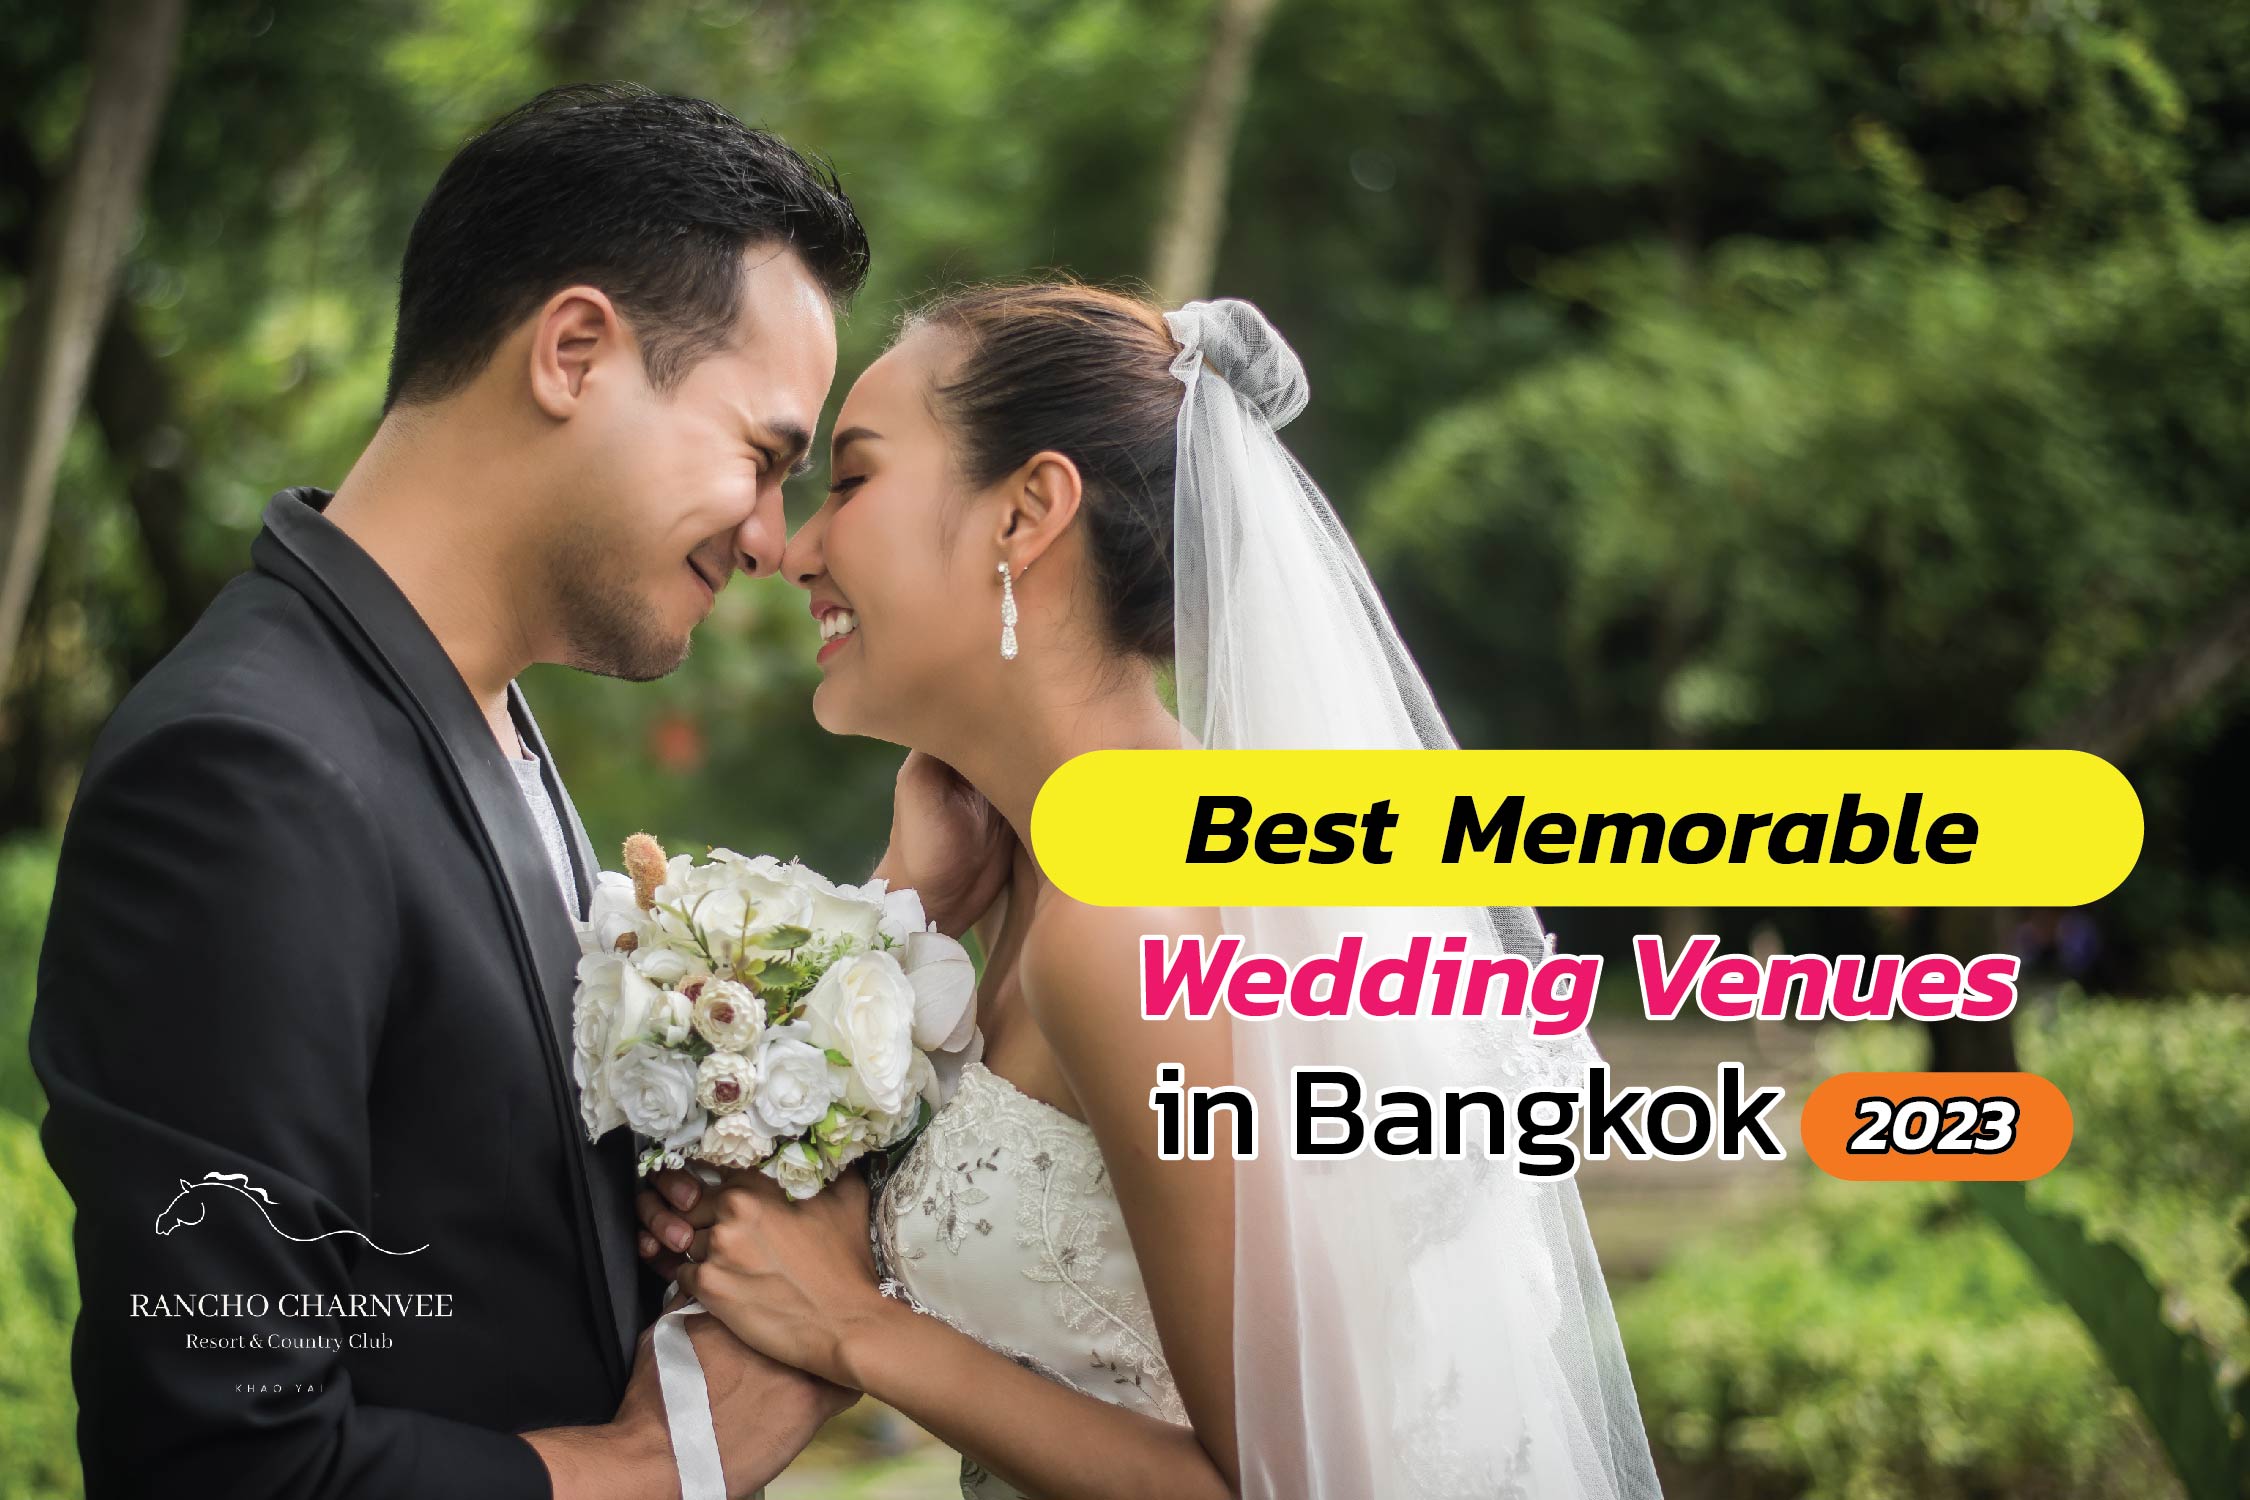 Best Memorable Wedding Venues in Bangkok 2023